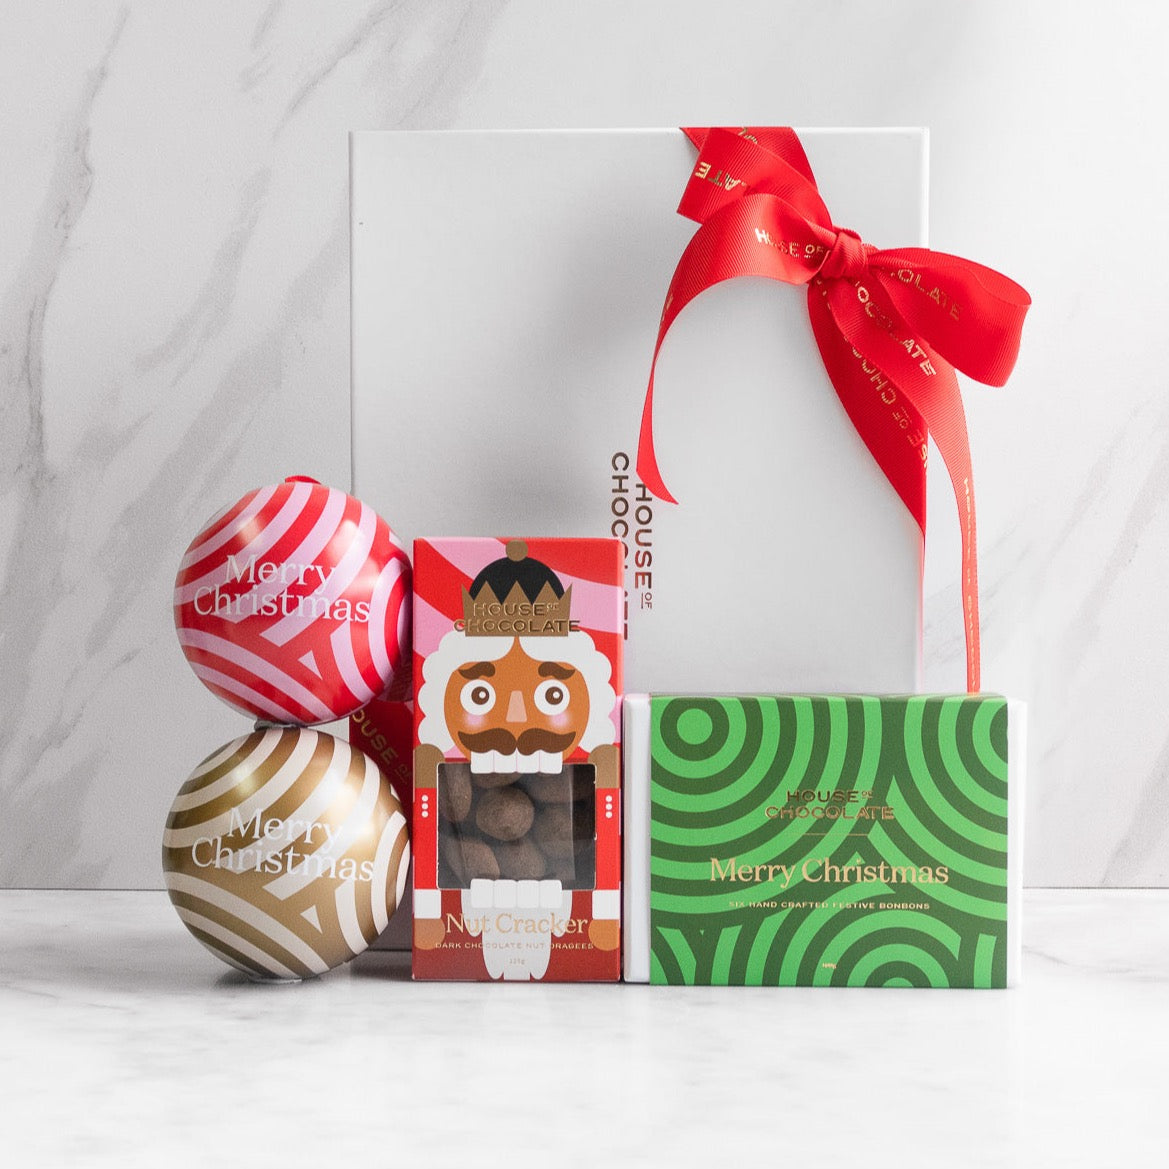 Festive Christmas Gift Box | House of Chocolate